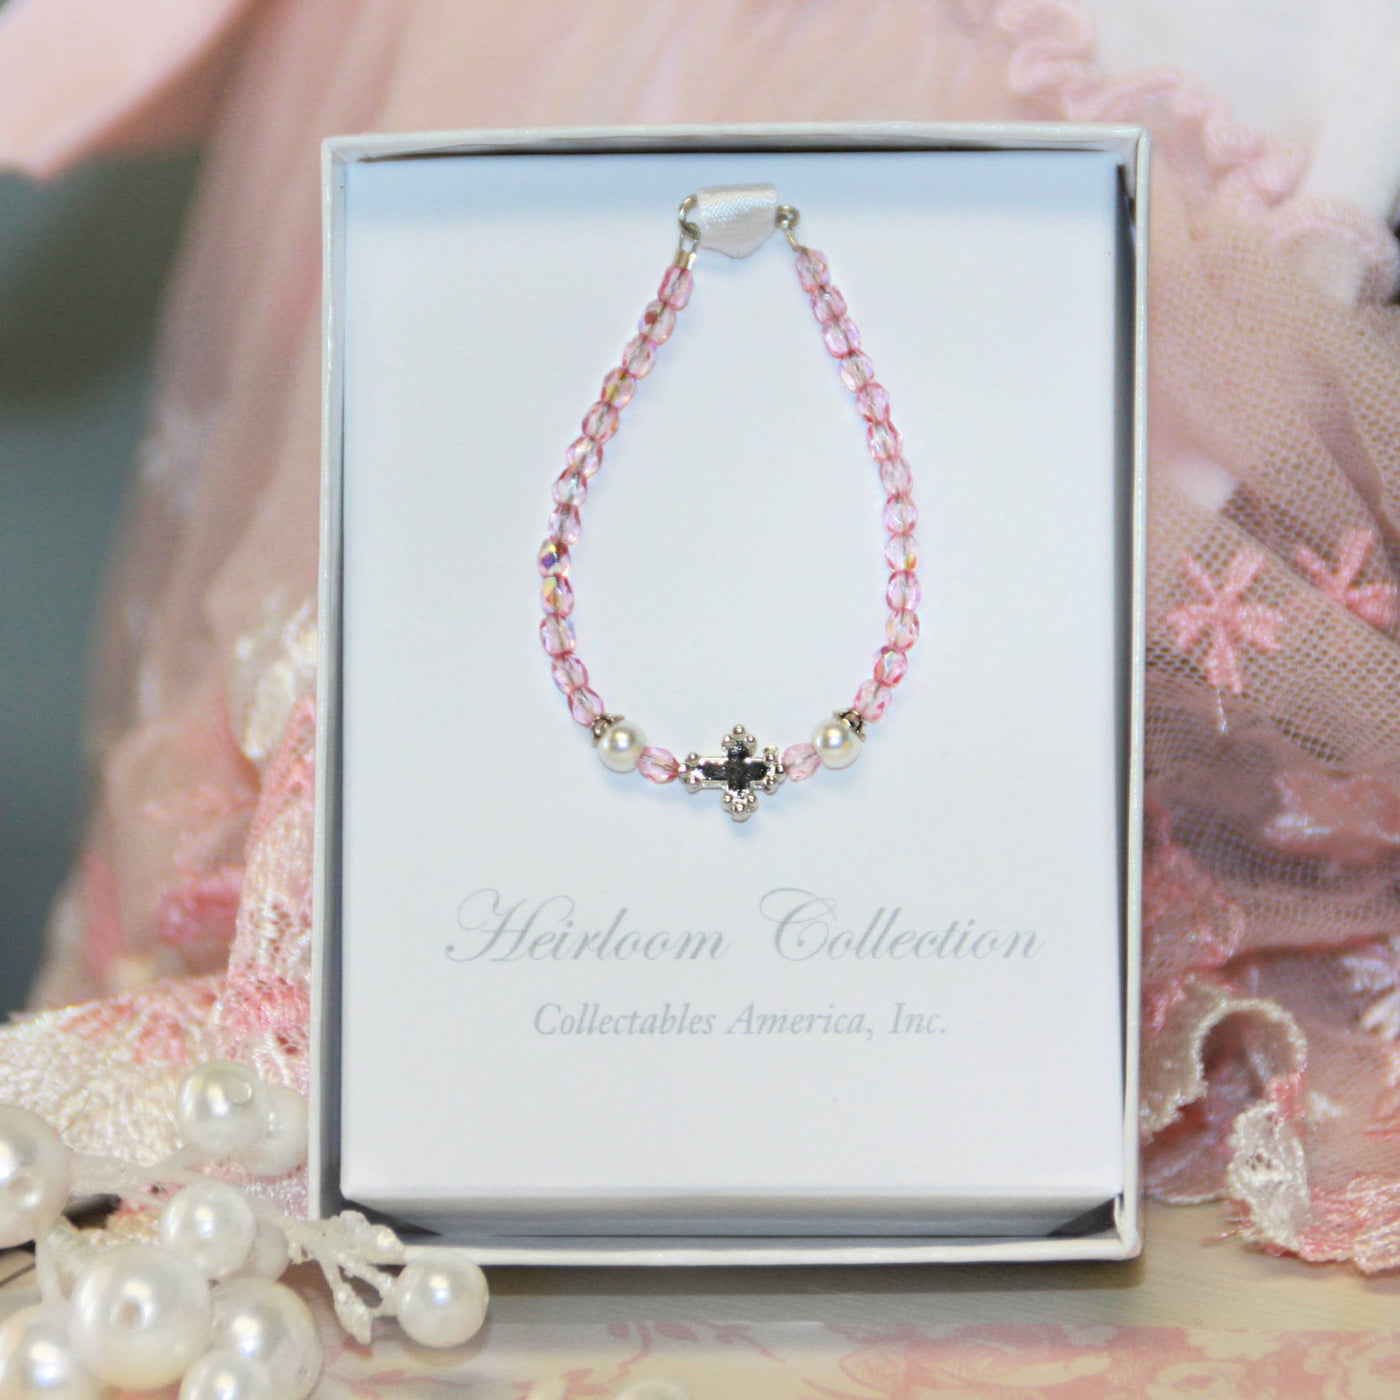 Collectables America - Infant Sweet Cross Pink Crystal Bracelet CJ-434-4